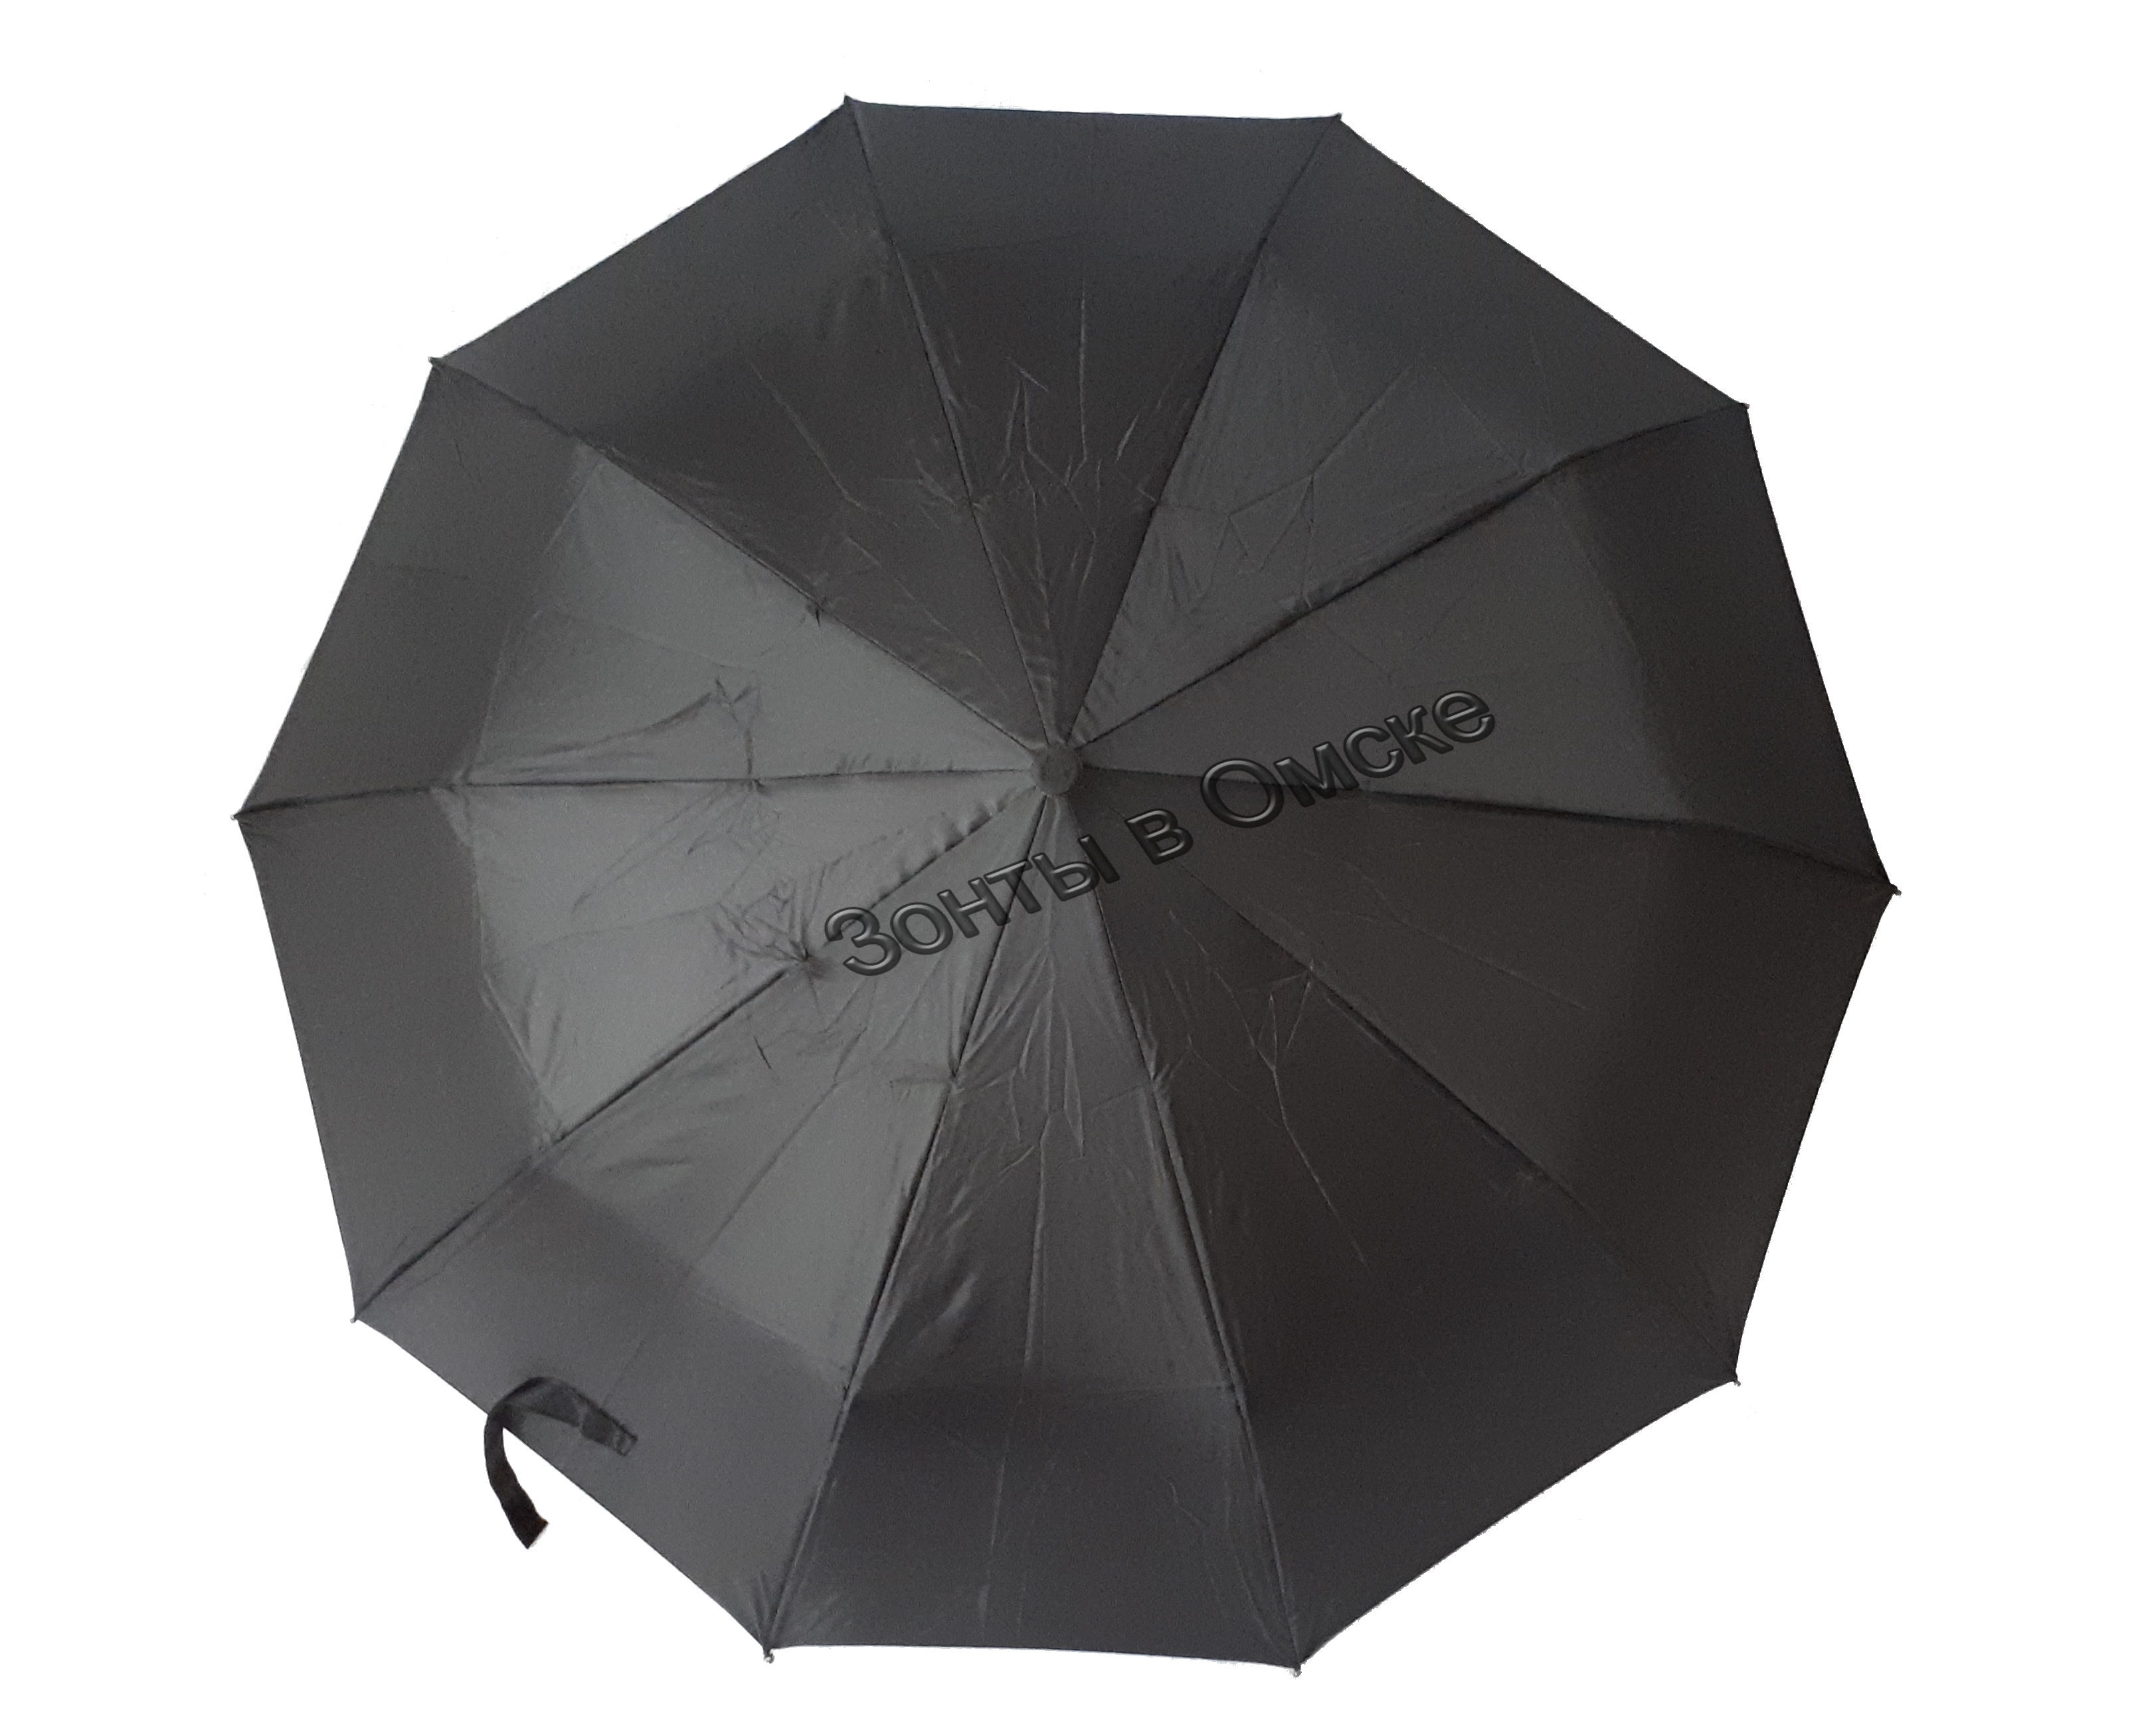 Umbrellas semiautomatic in 3 additions